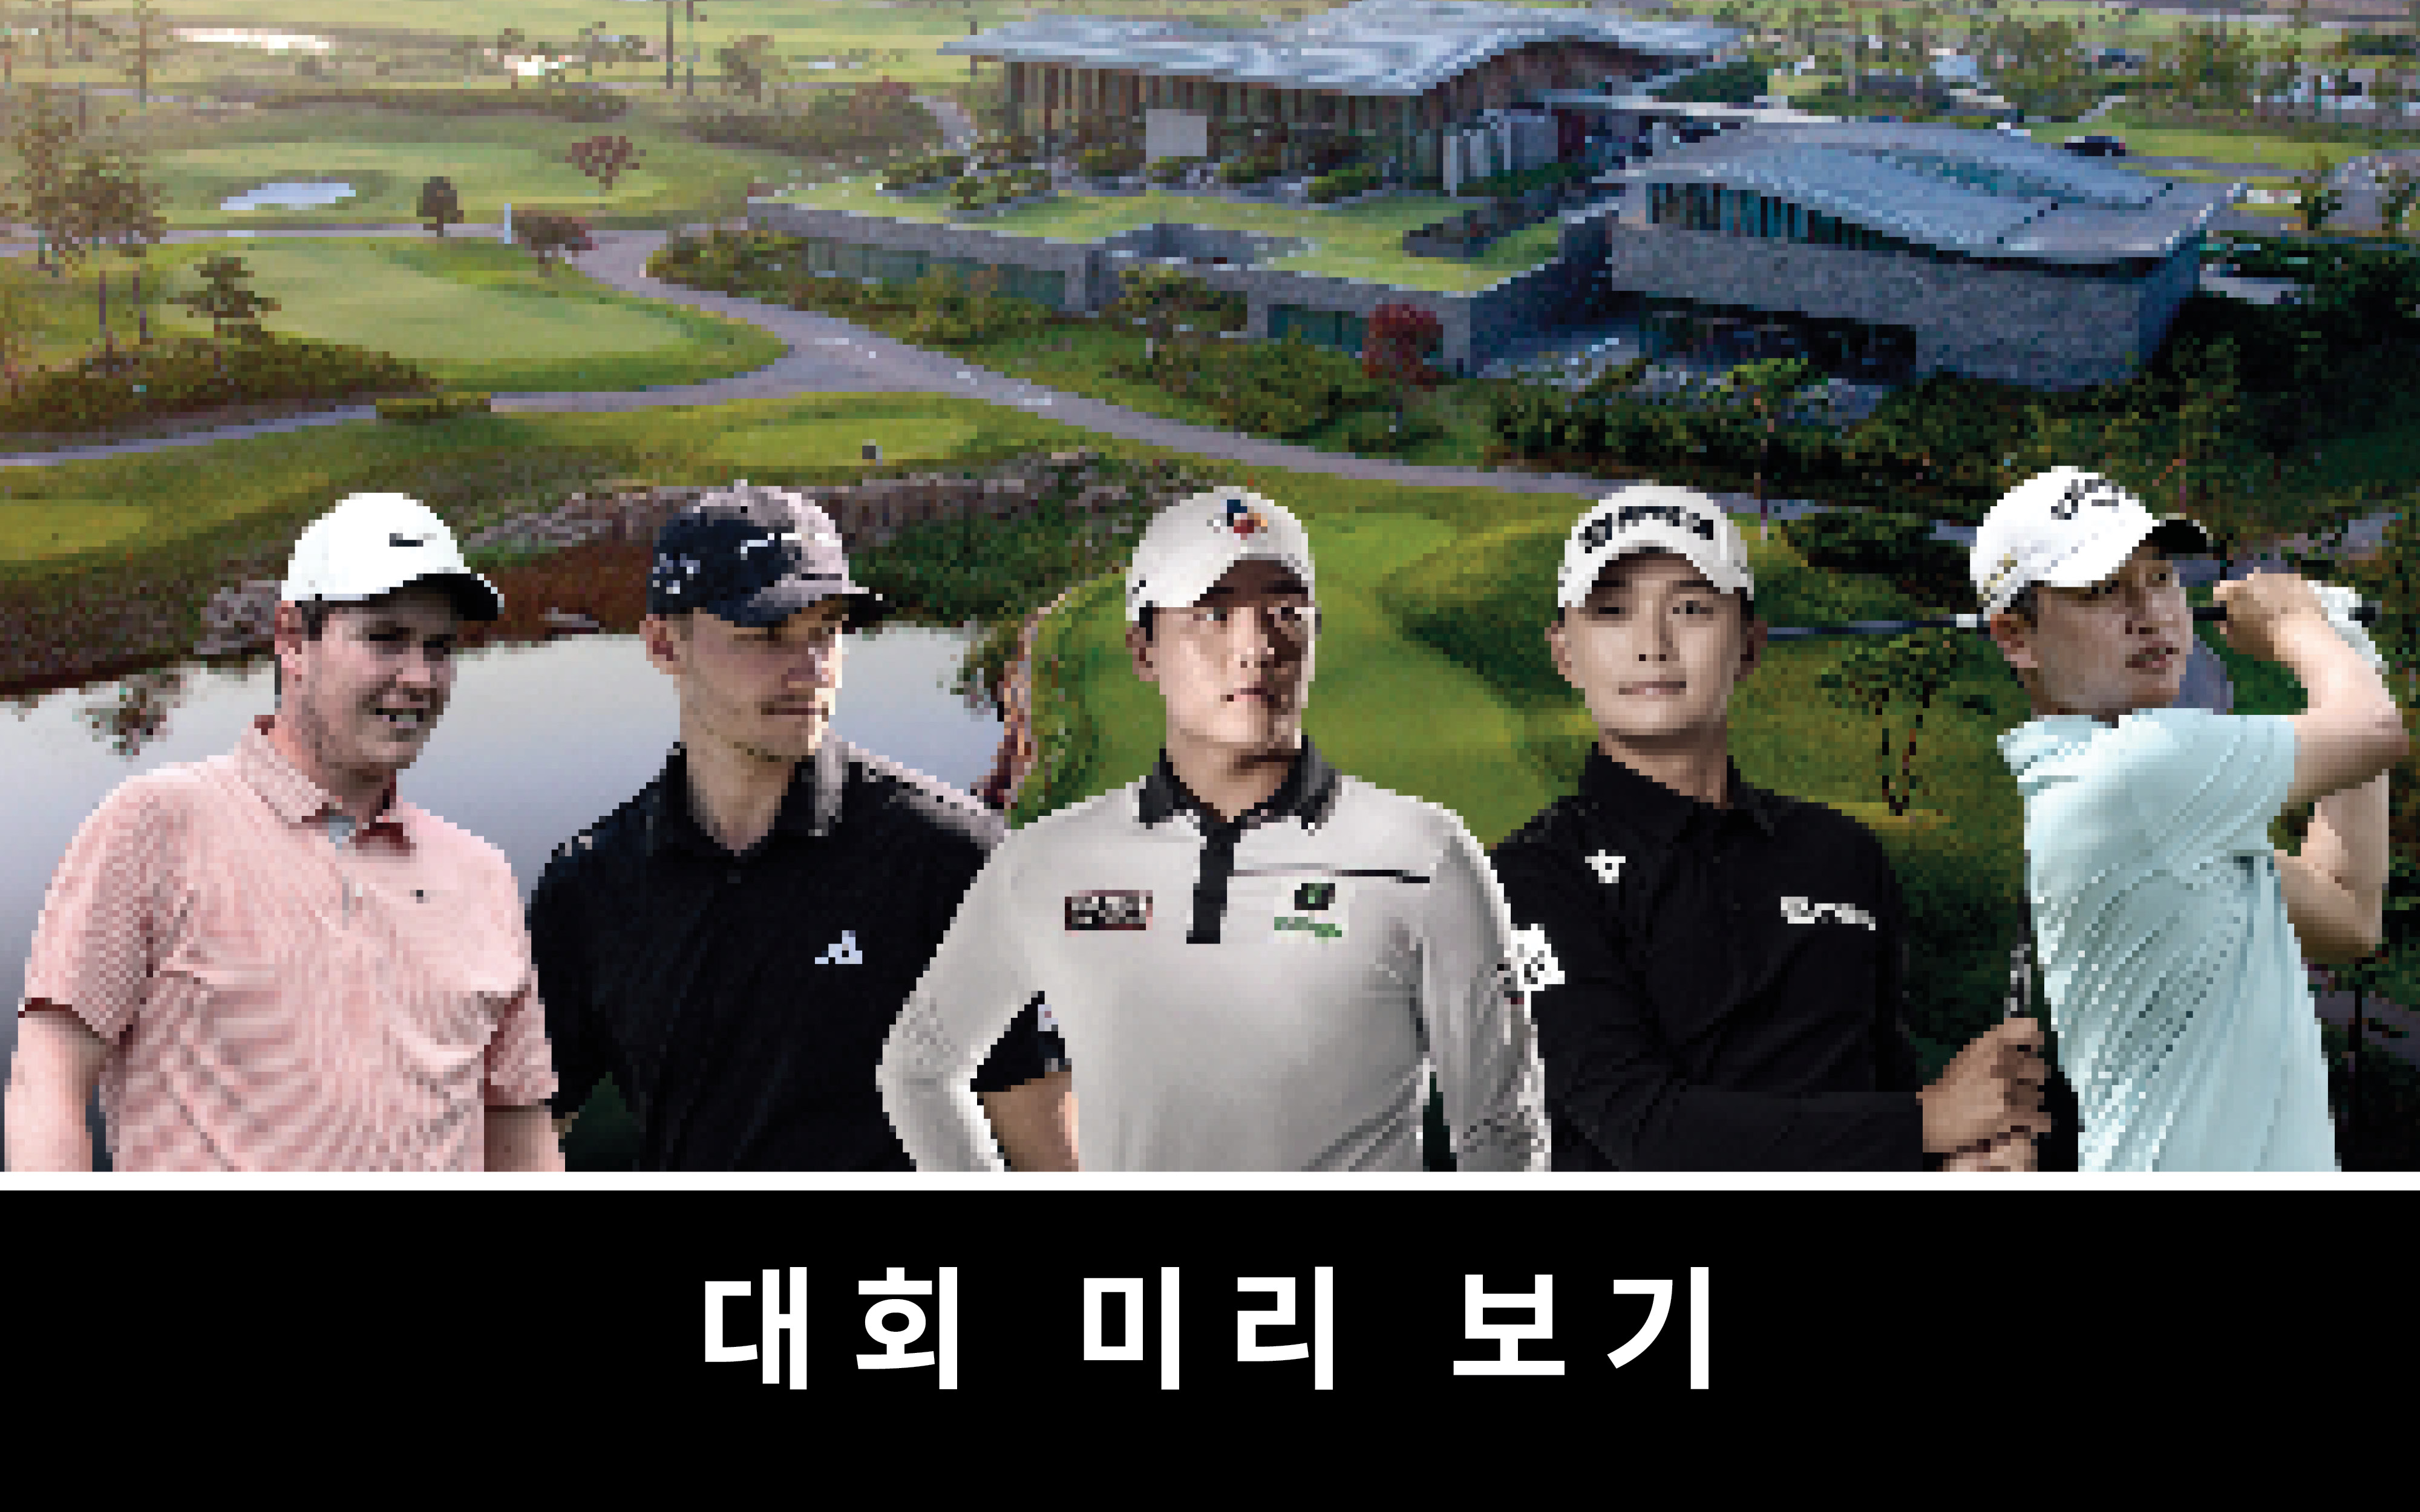 Korean Championship